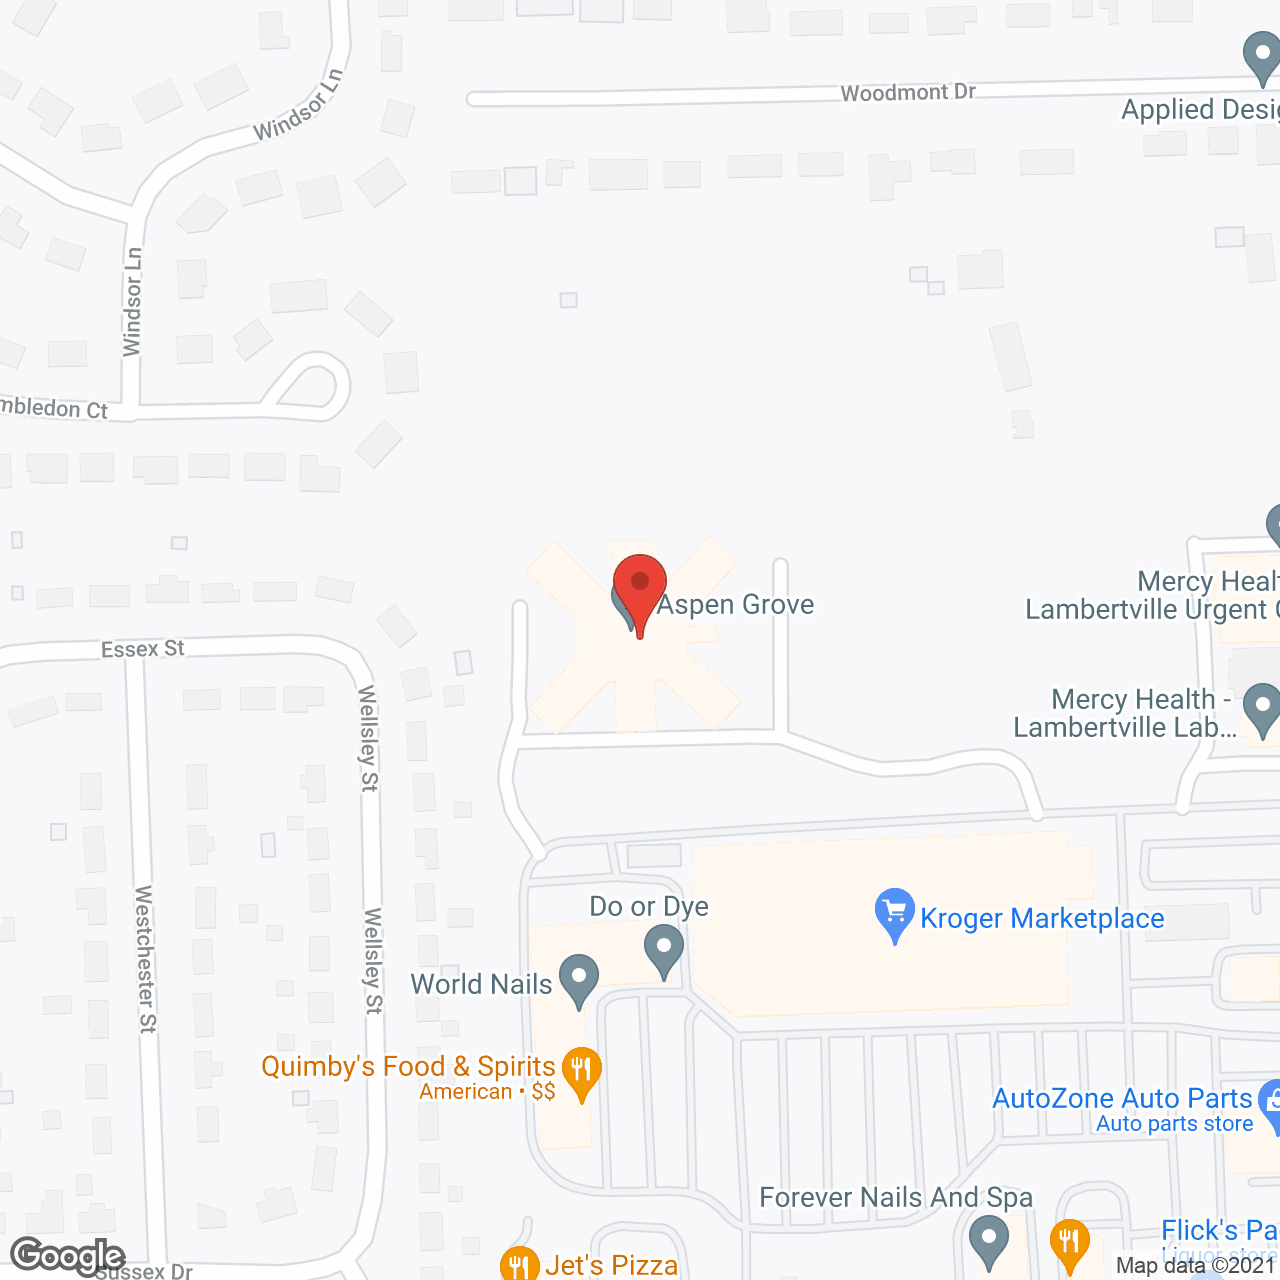 Aspen Grove in google map